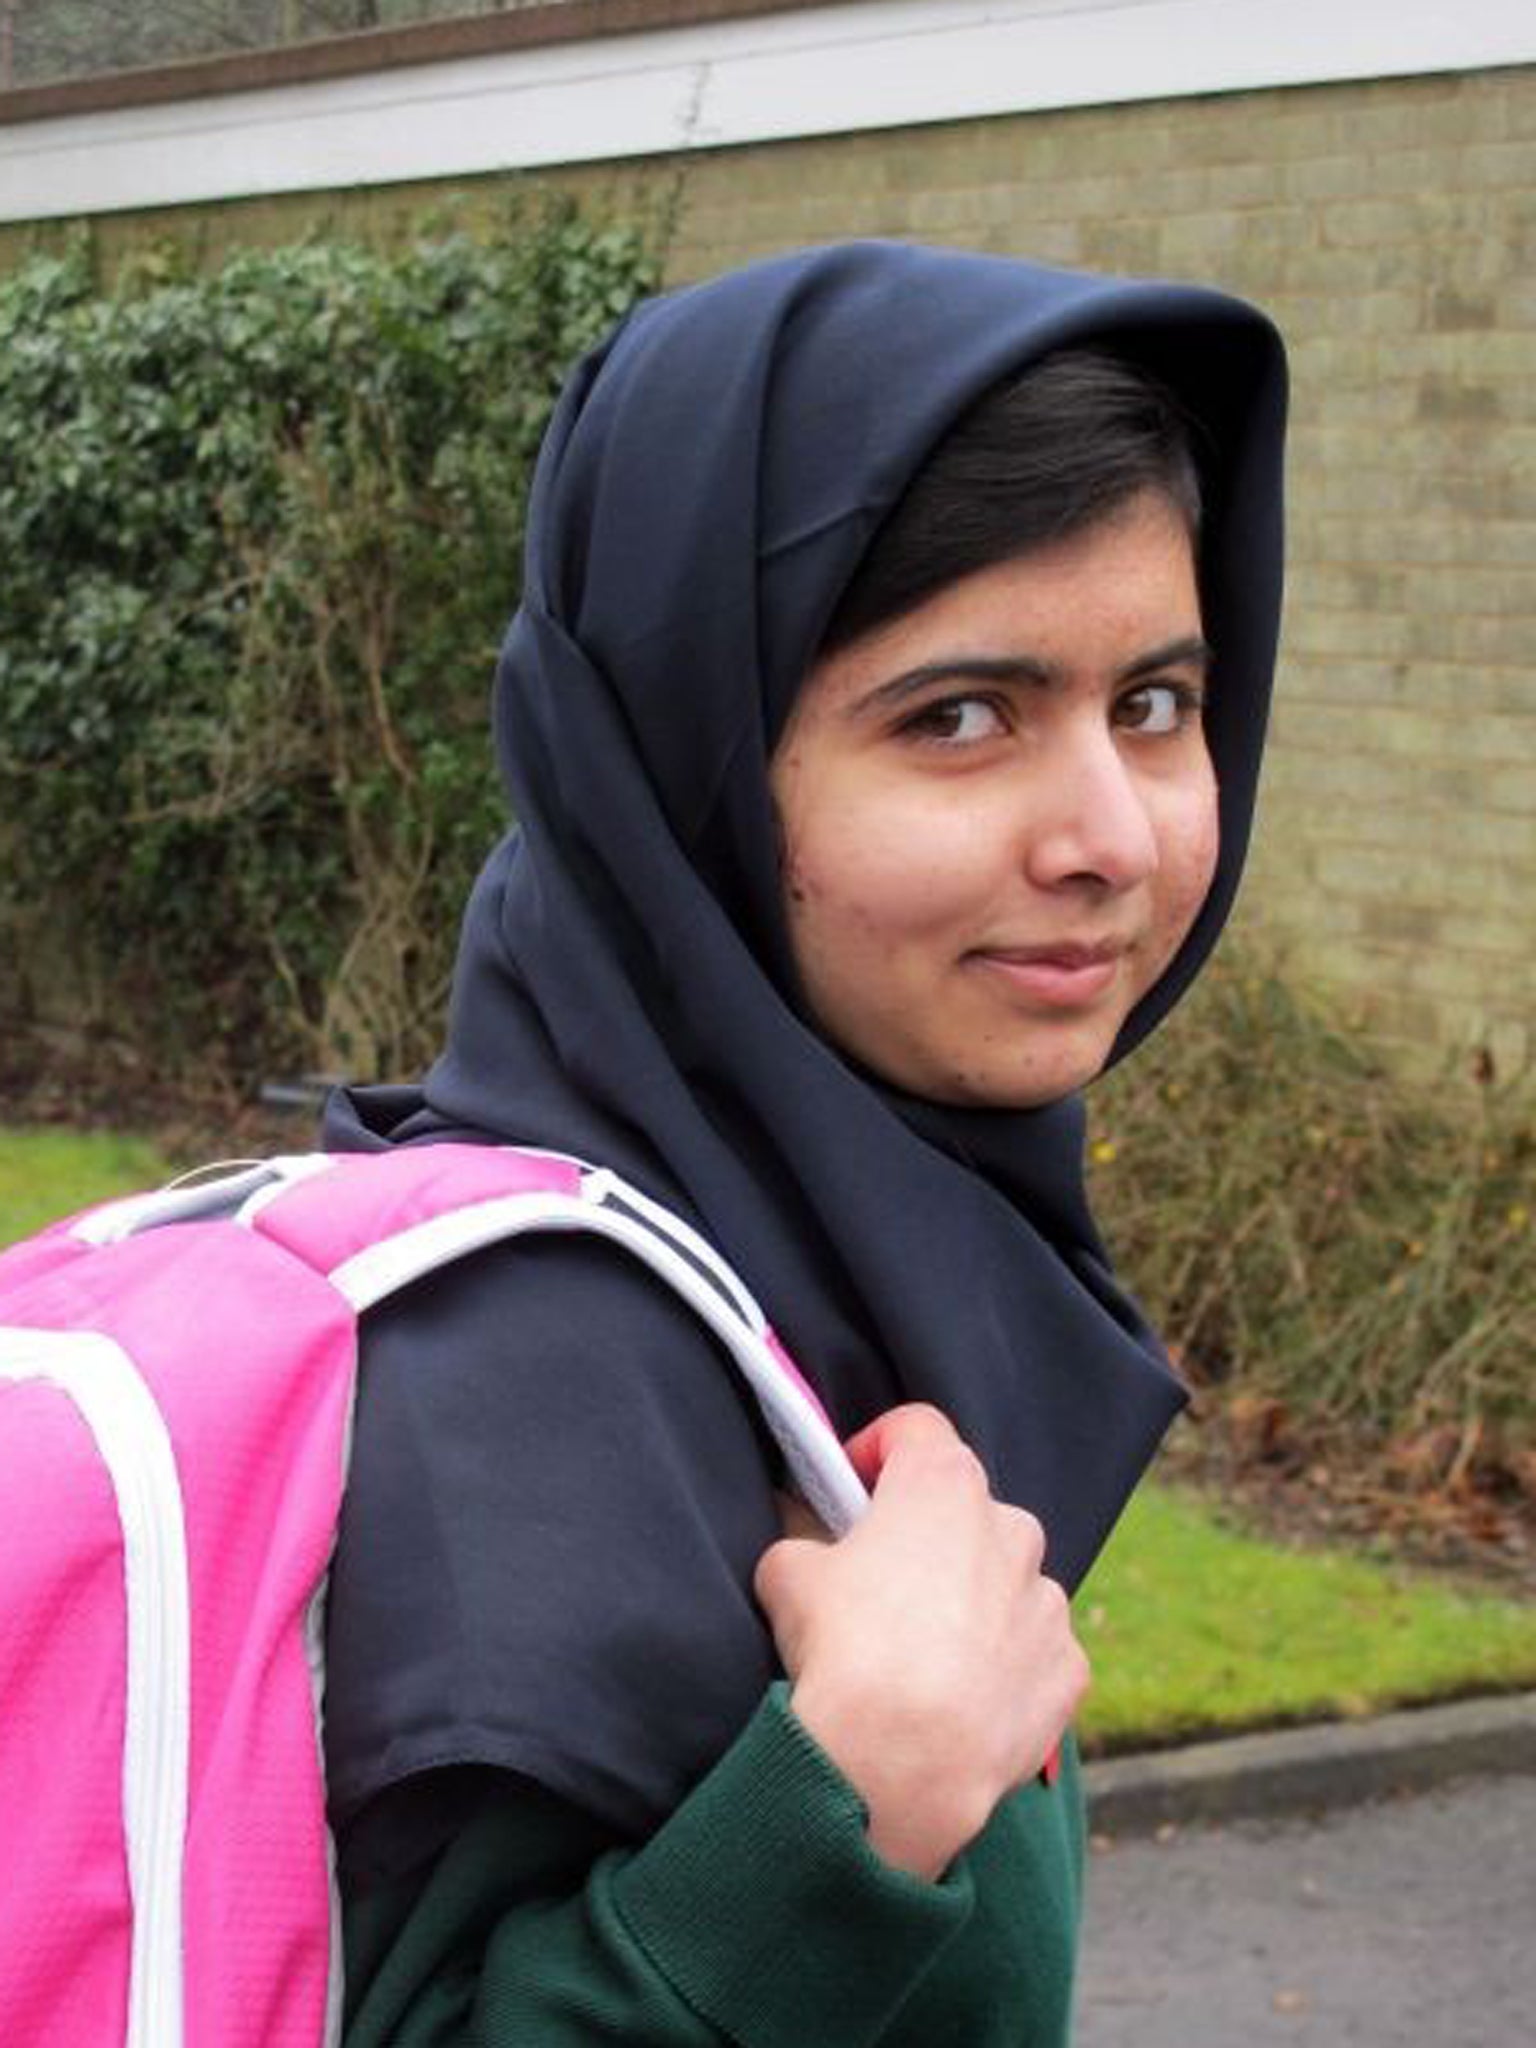 Malala began her first day at Edgbaston High School in Birmingham yesterday